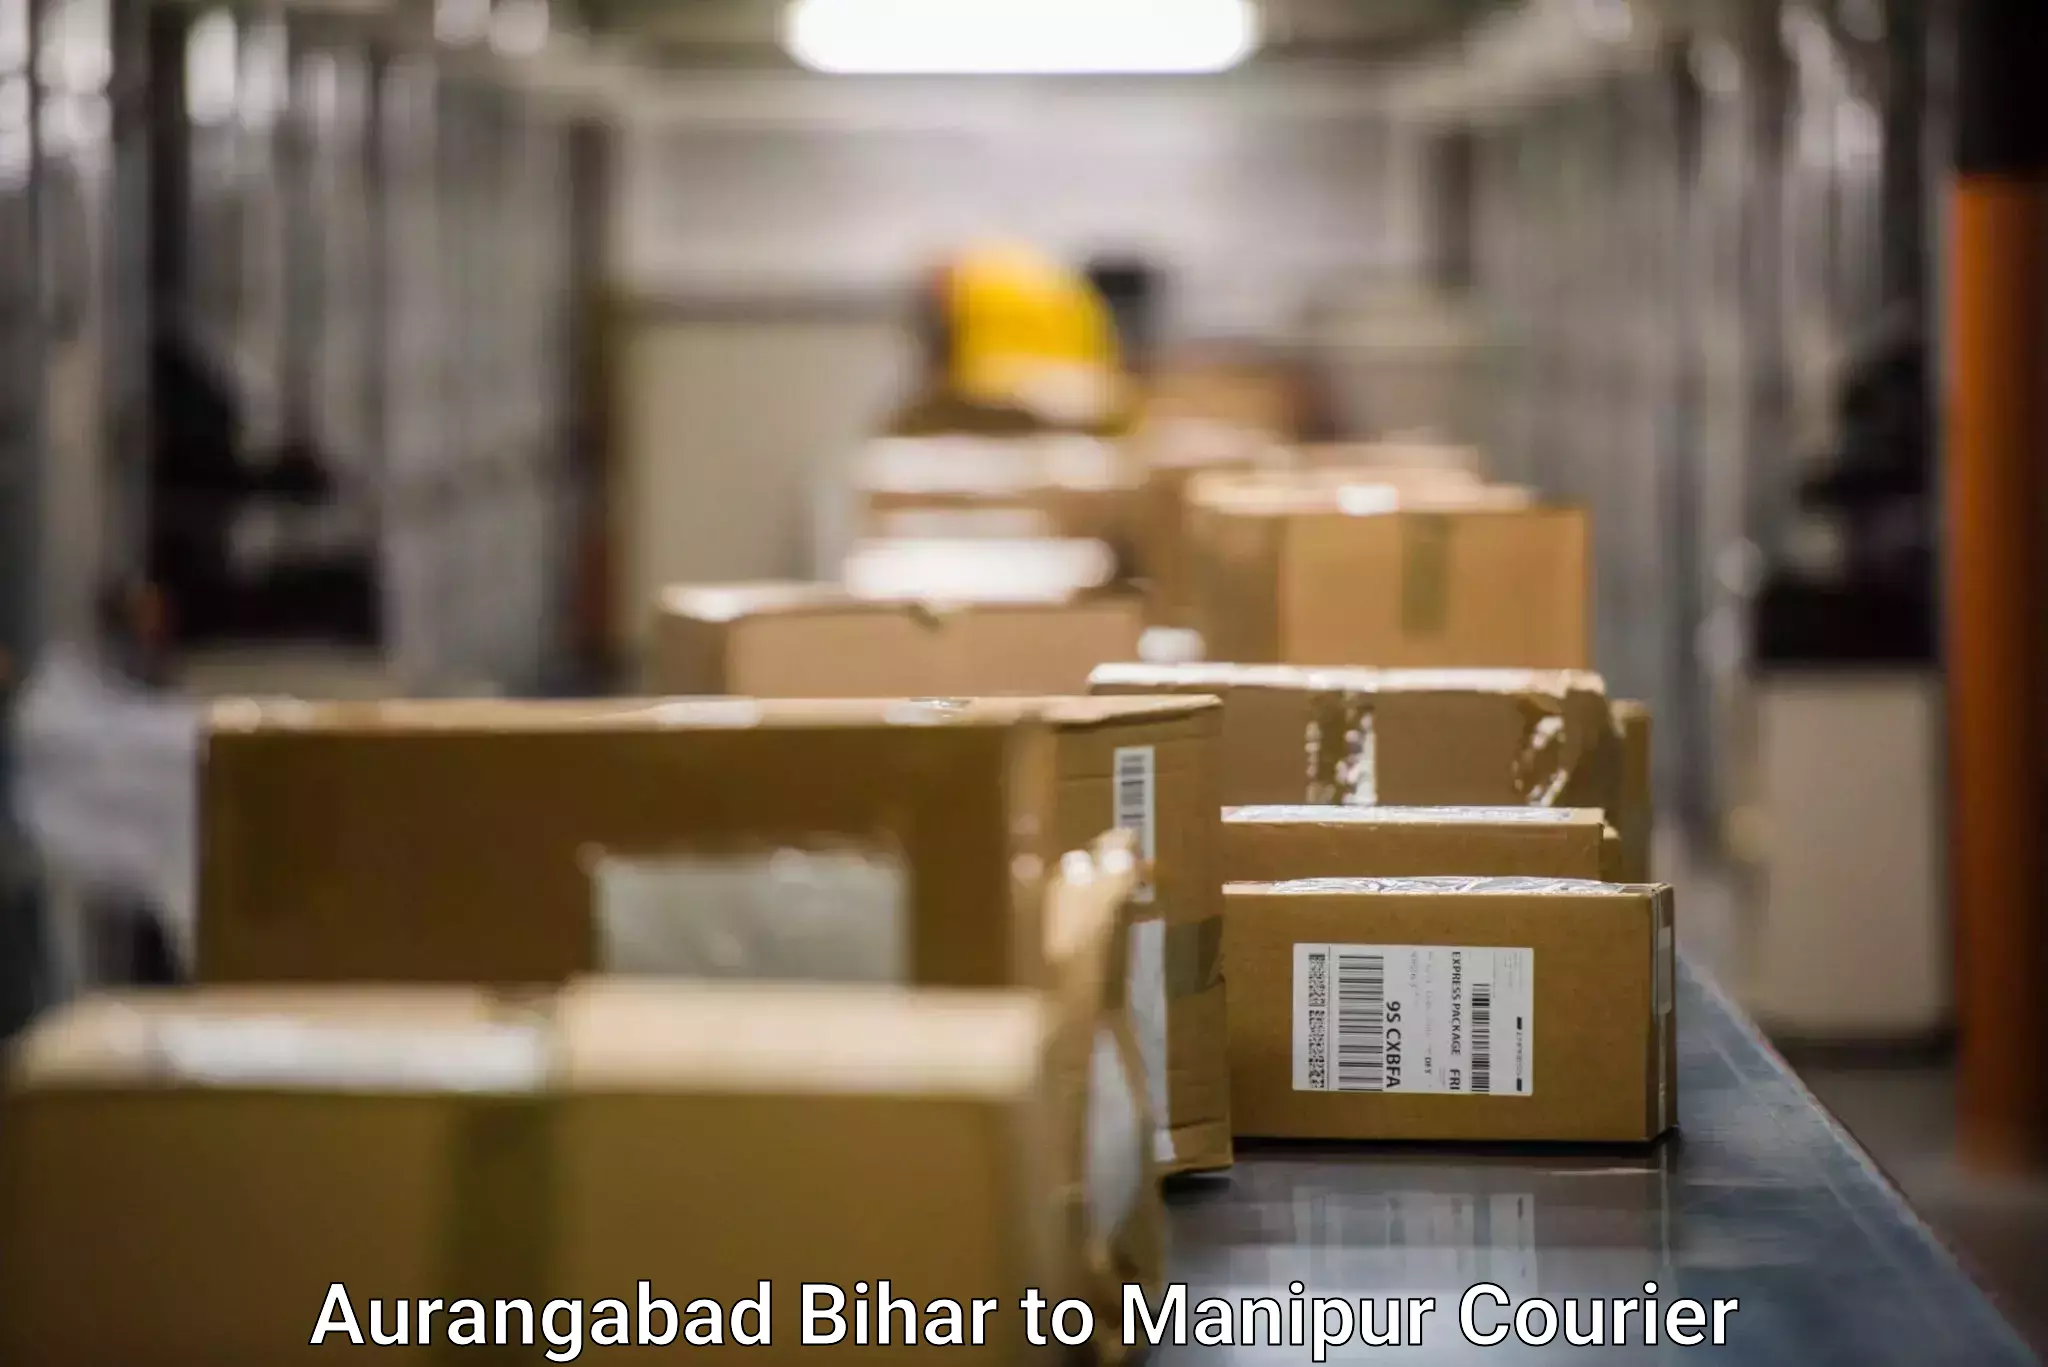 Ocean freight courier Aurangabad Bihar to Manipur